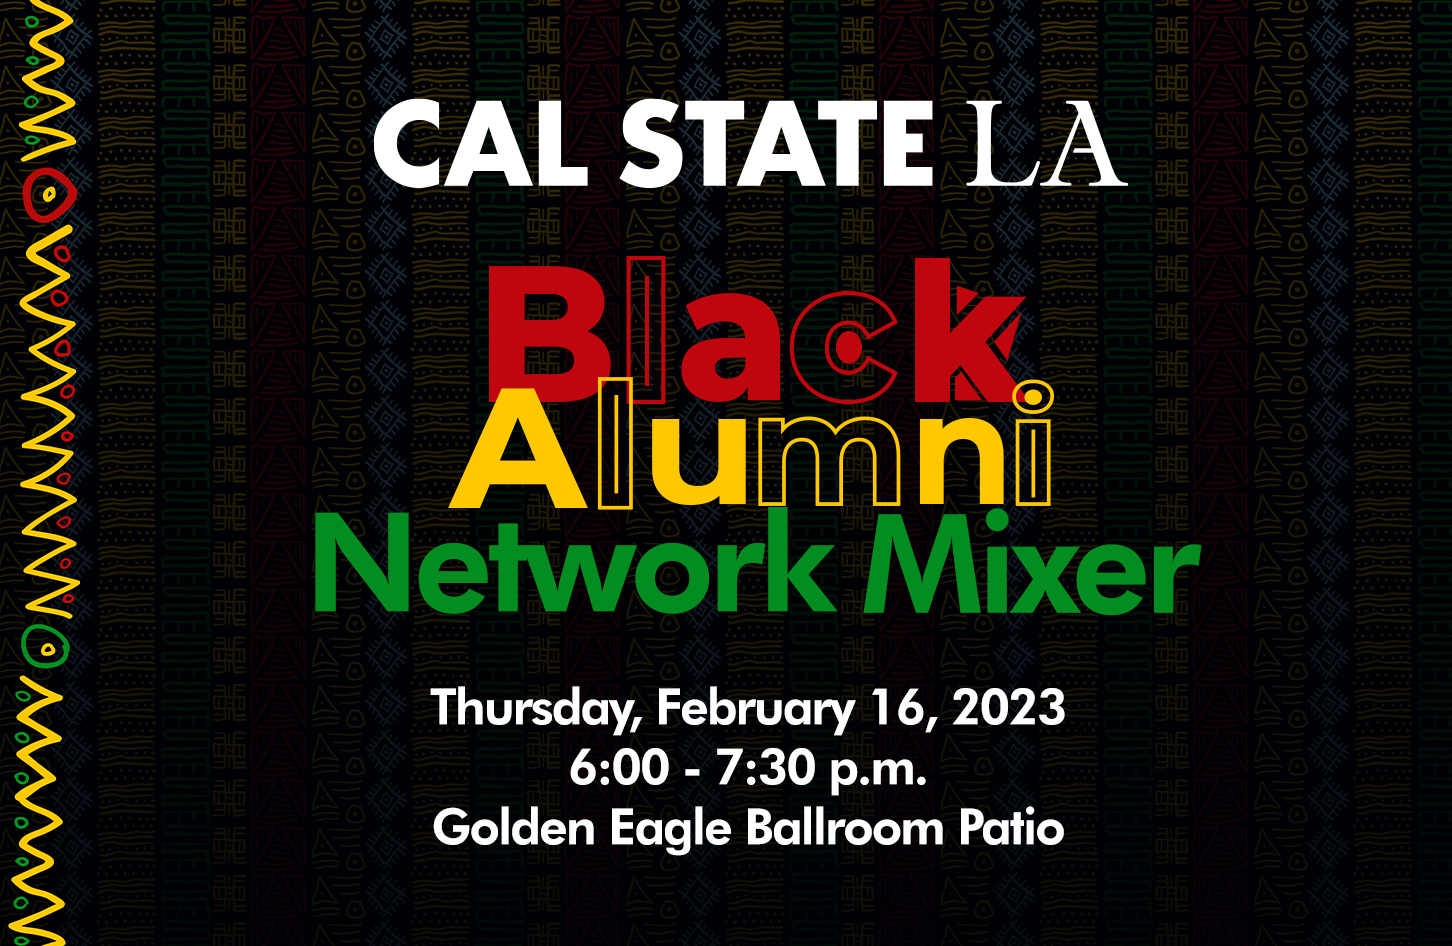 Black Alumni Network Mixer held on February 16, 2023